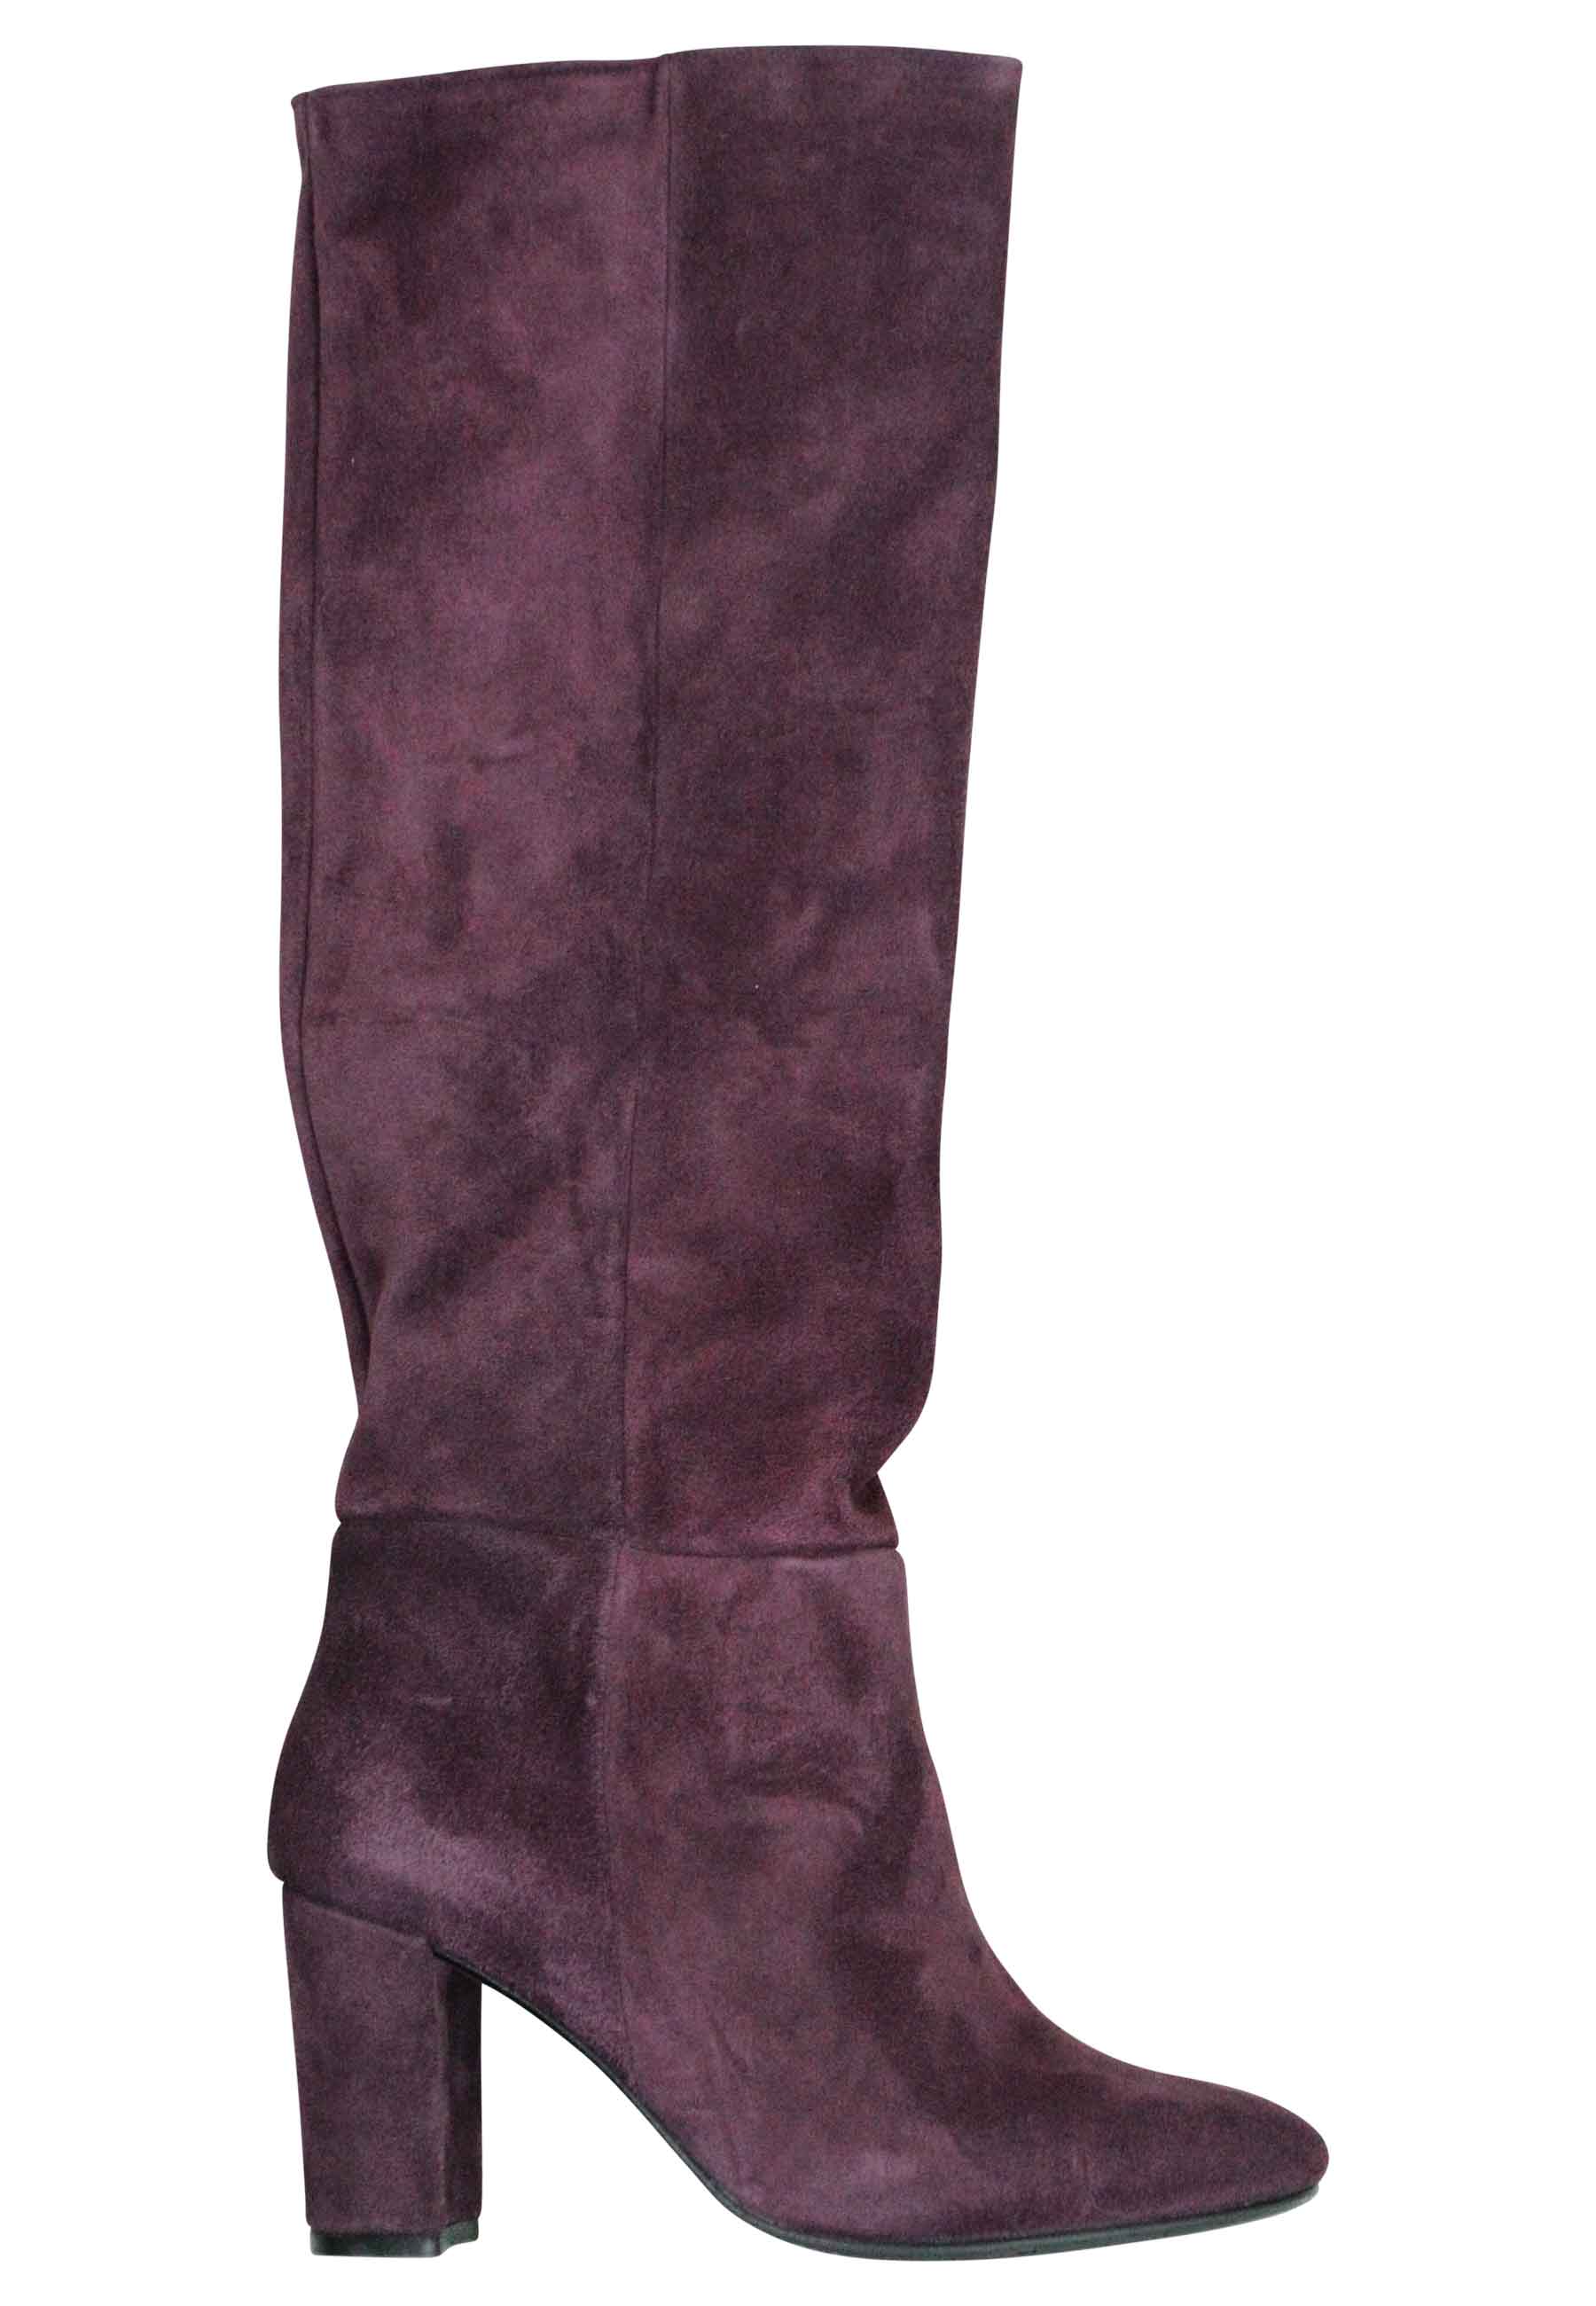 Women's tube boots in burgundy suede, high heel, round toe